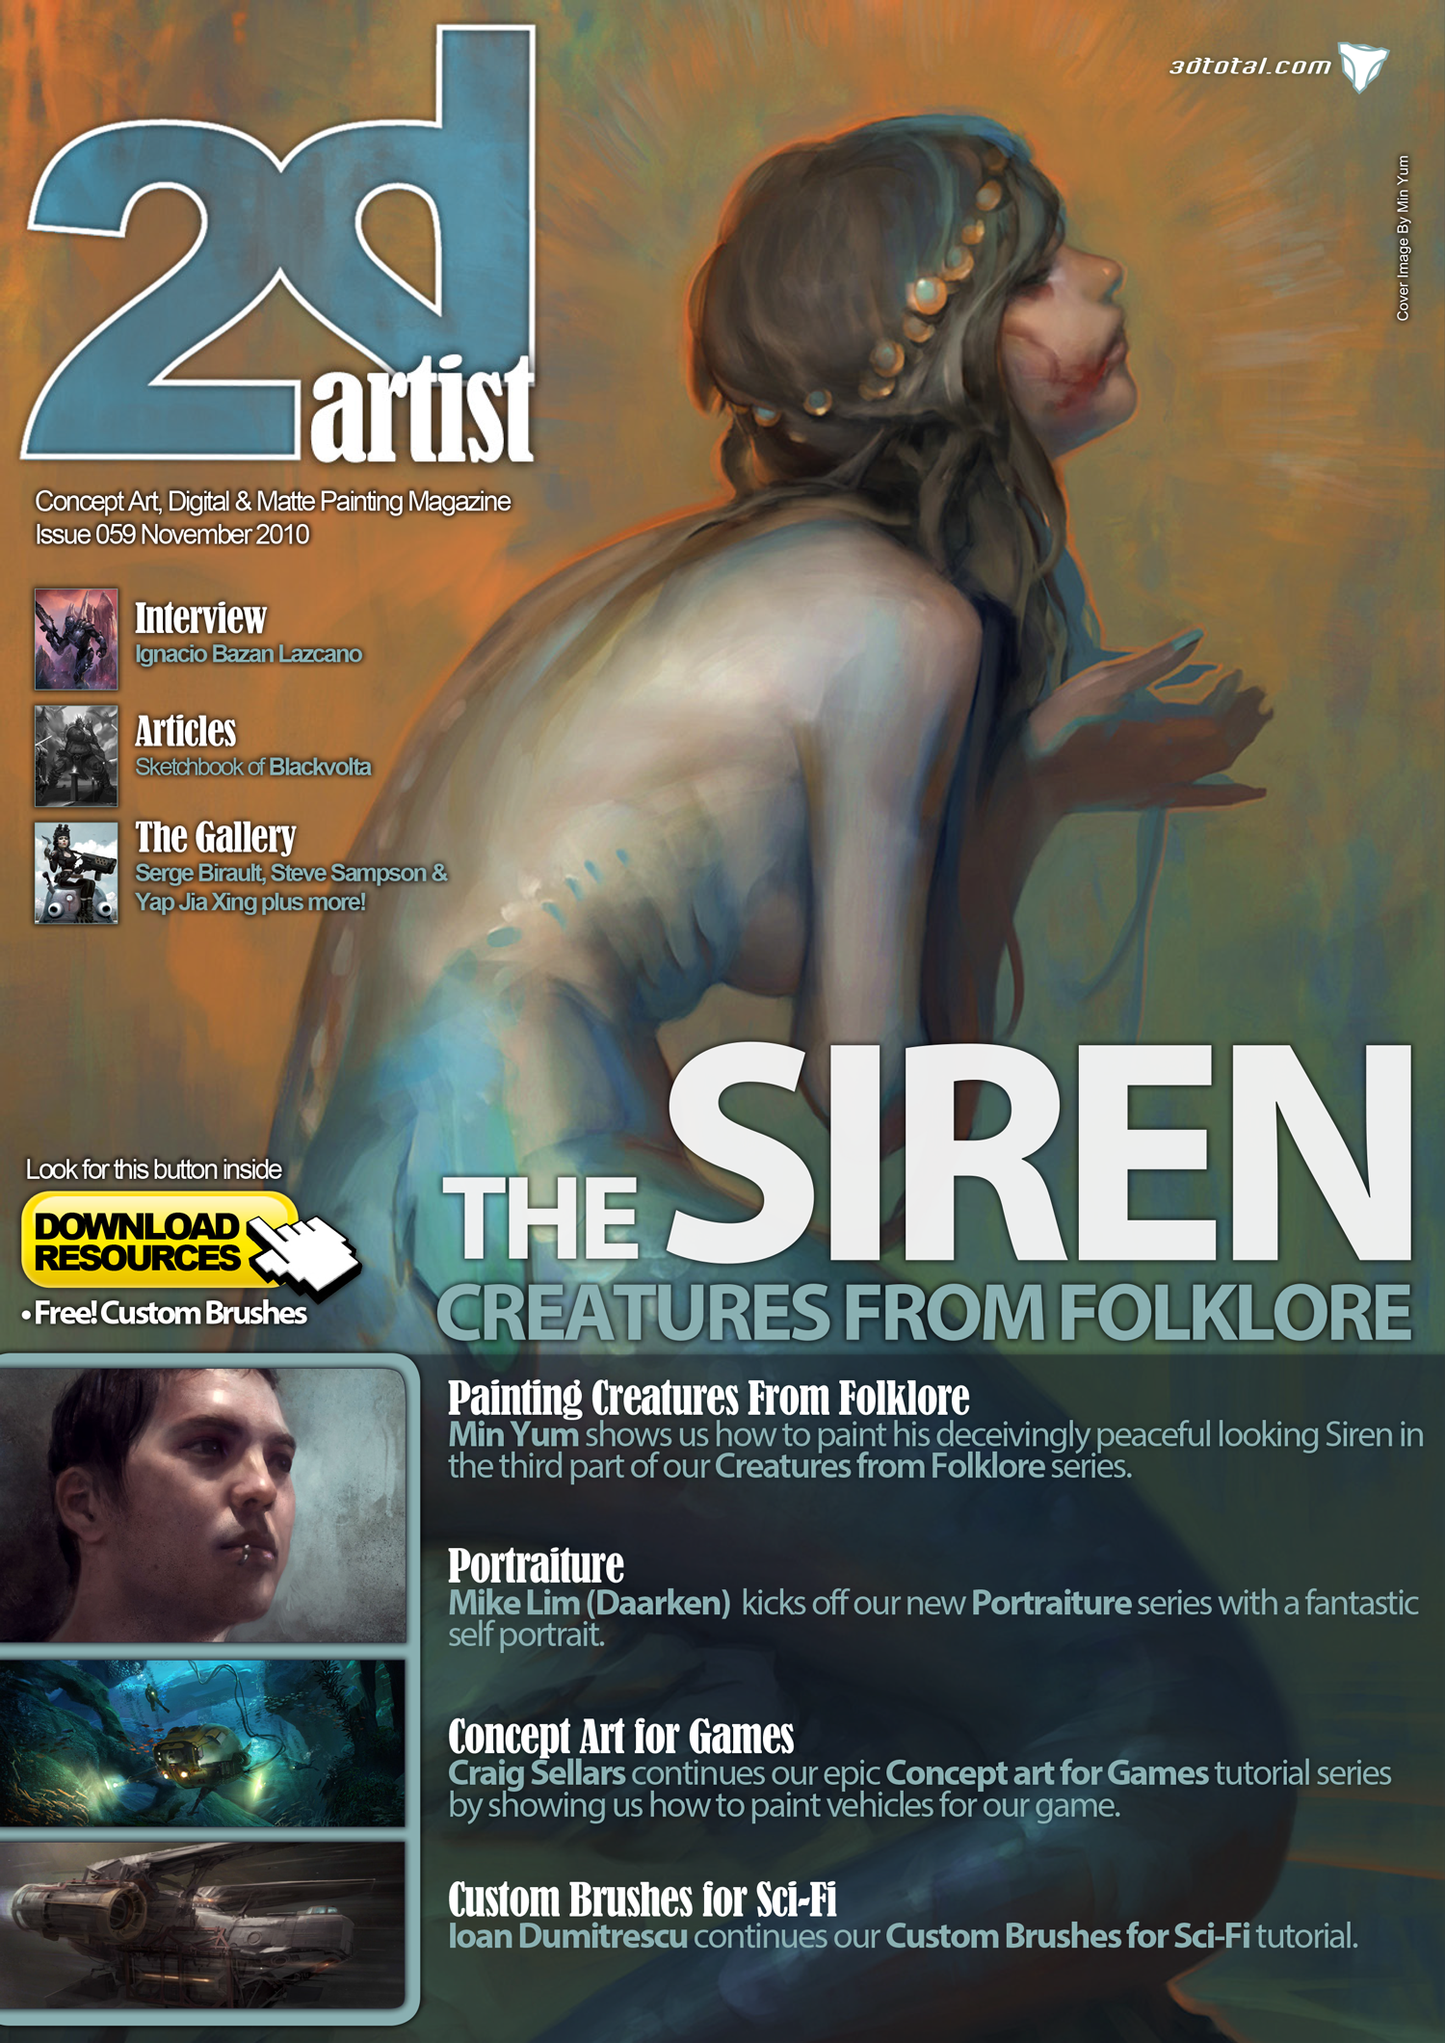 2DArtist: Issue 059 - November 2010 (Download Only)